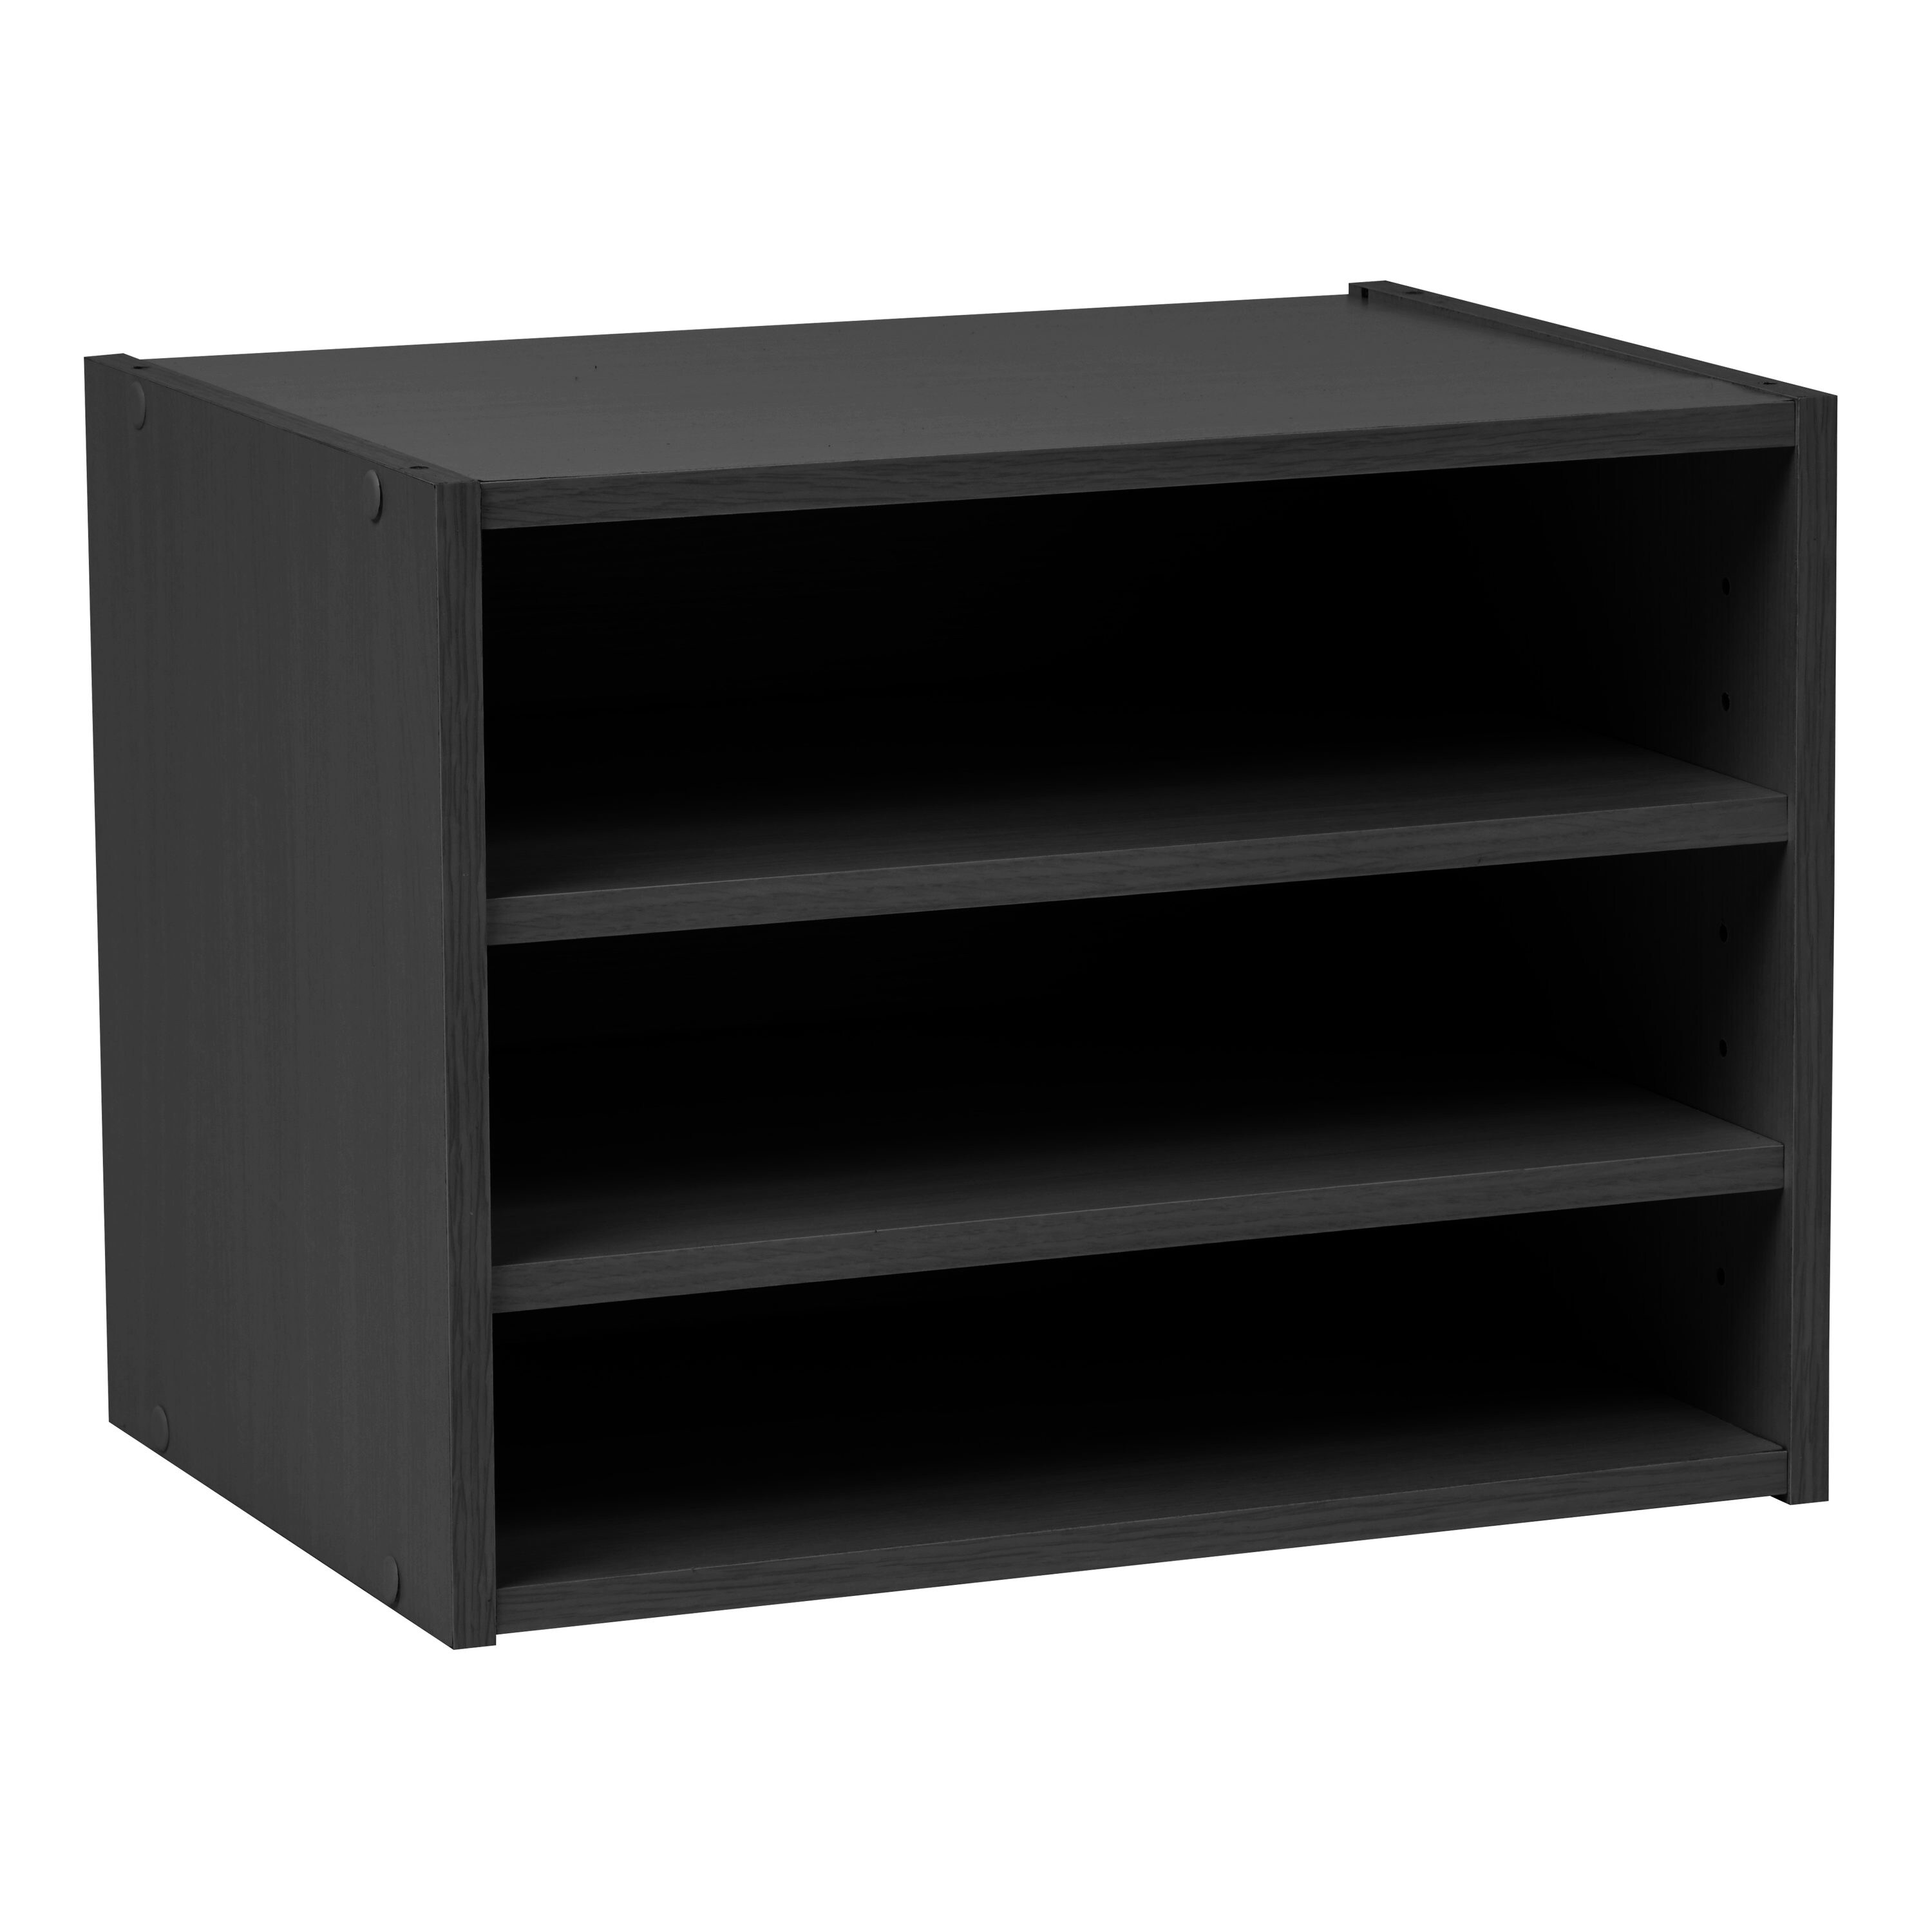 3 Tier Book Case Home Office Organizer Display Shelf Storage Composite Wood New 